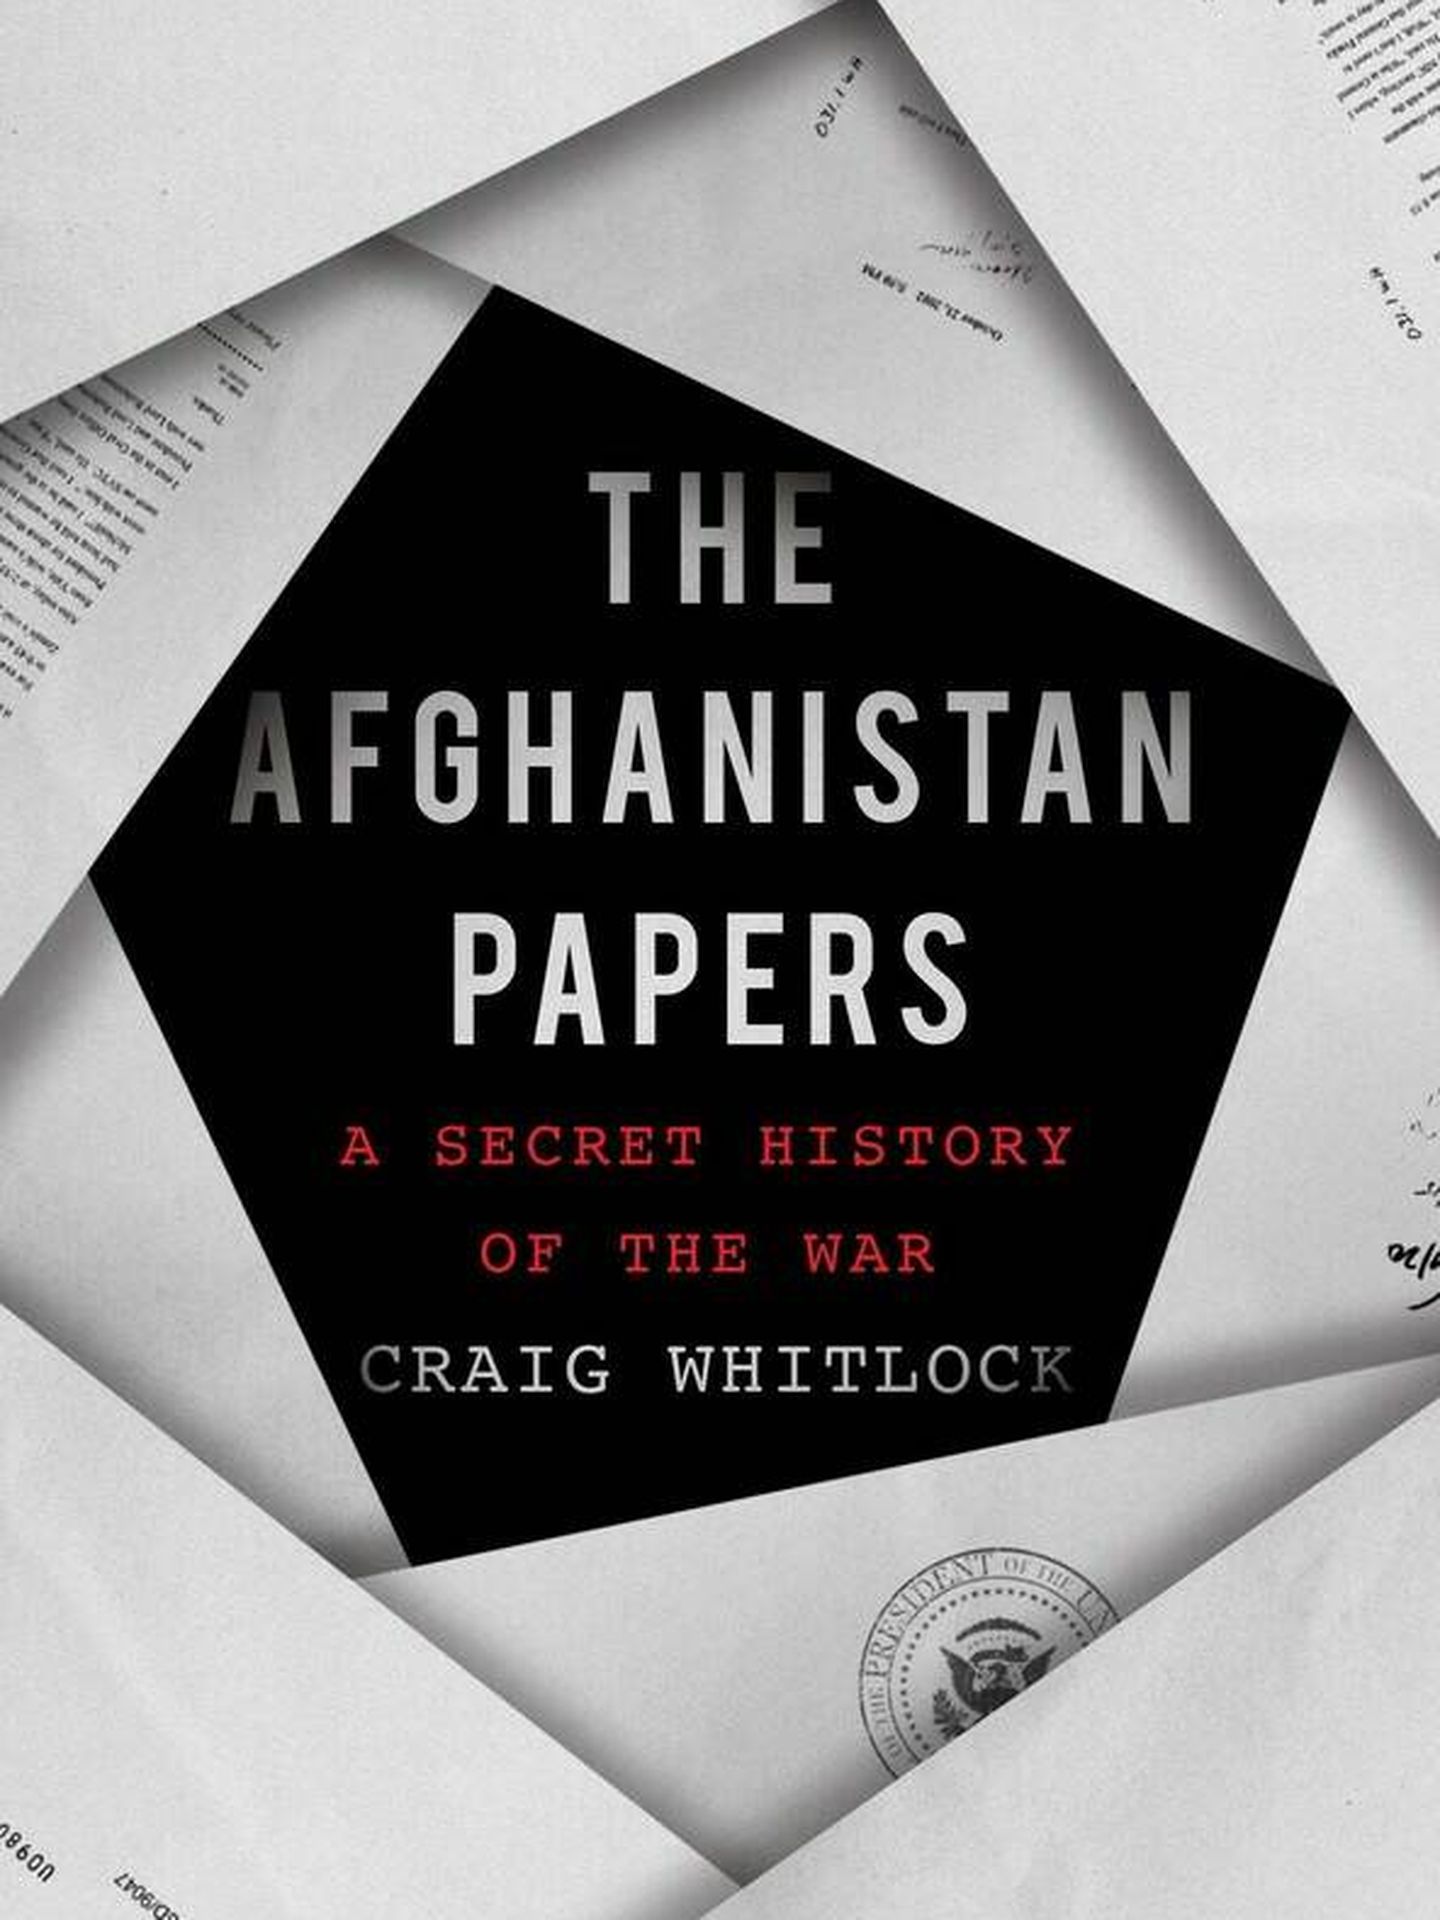 Portada del libro 'The Afghanistan Papers'. (Foto cedida)